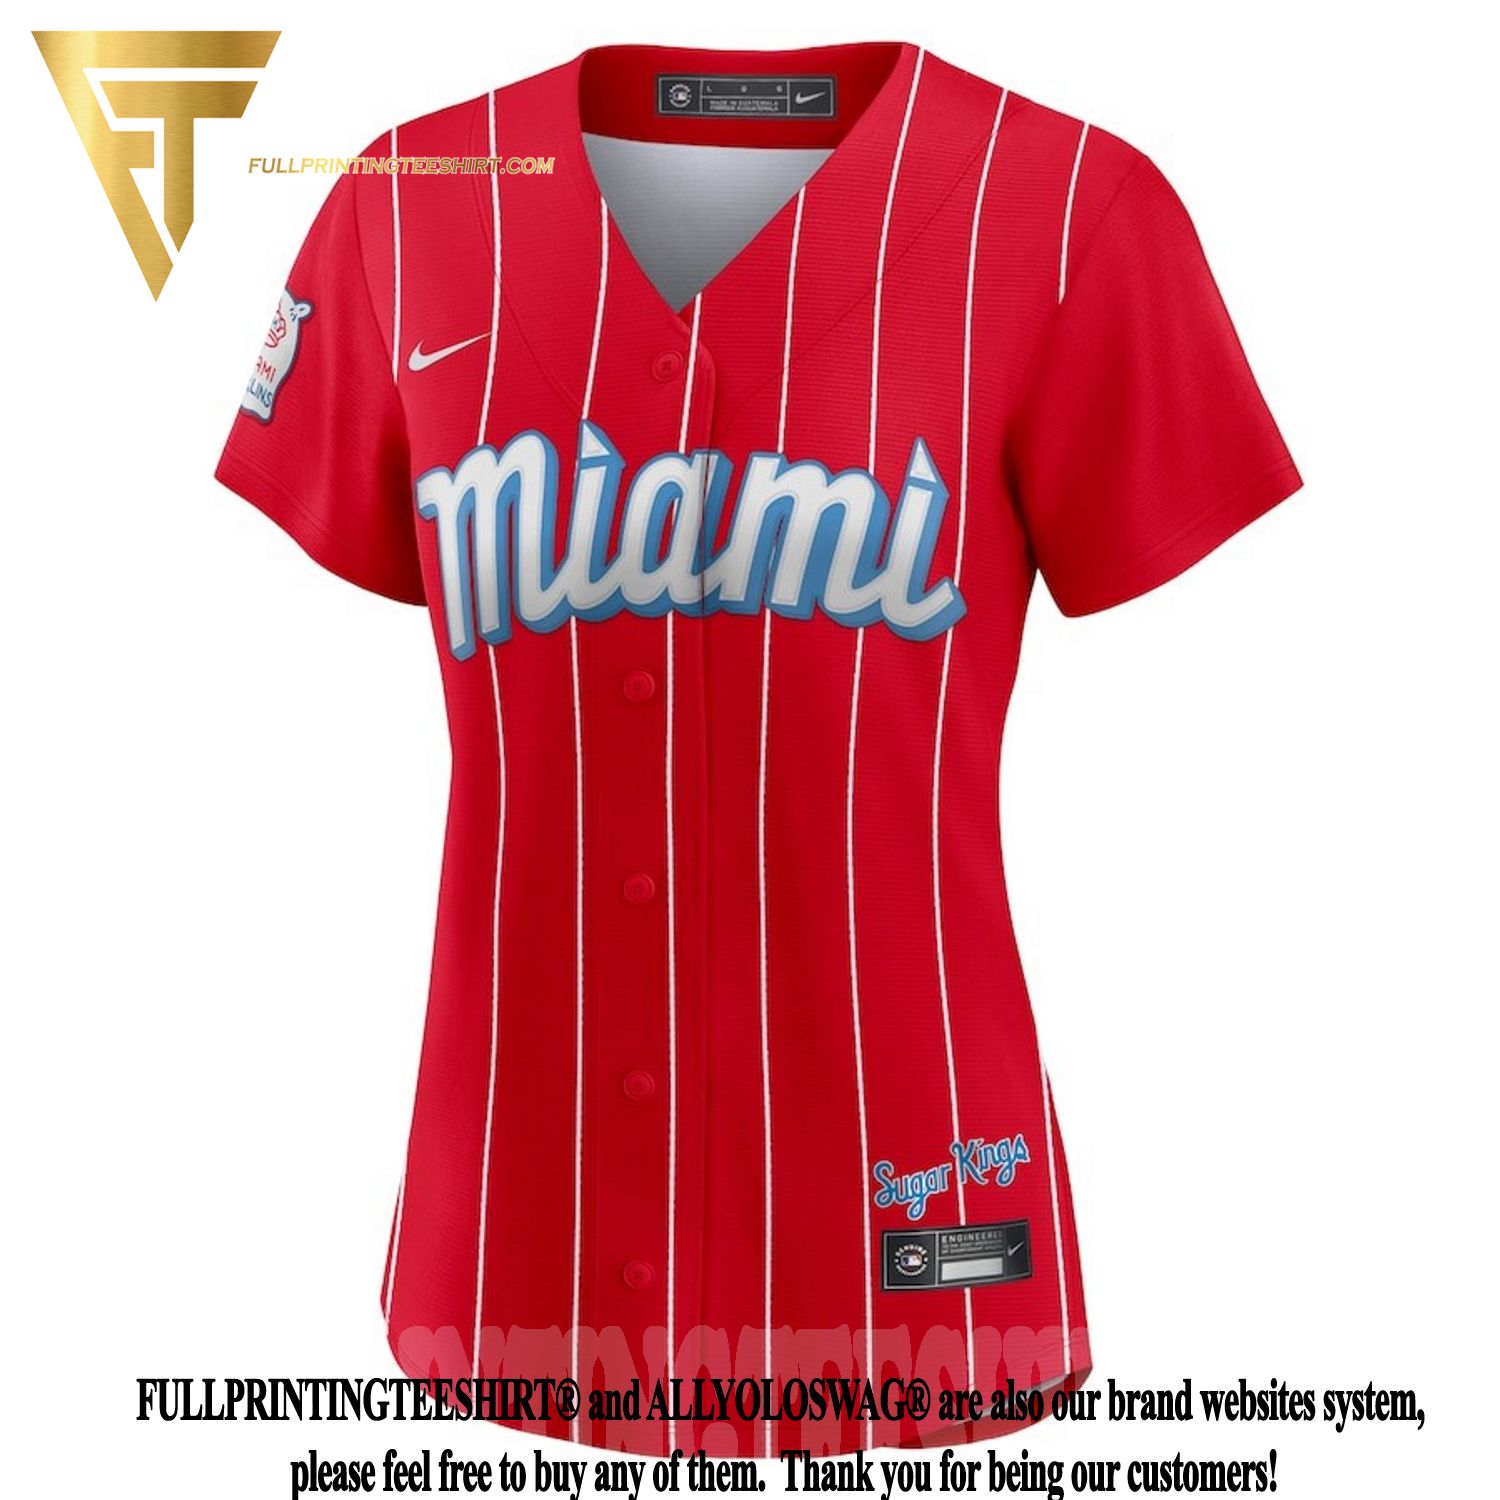 MLB Miami Marlins City Connect (Brian Anderson) Men's T-Shirt.